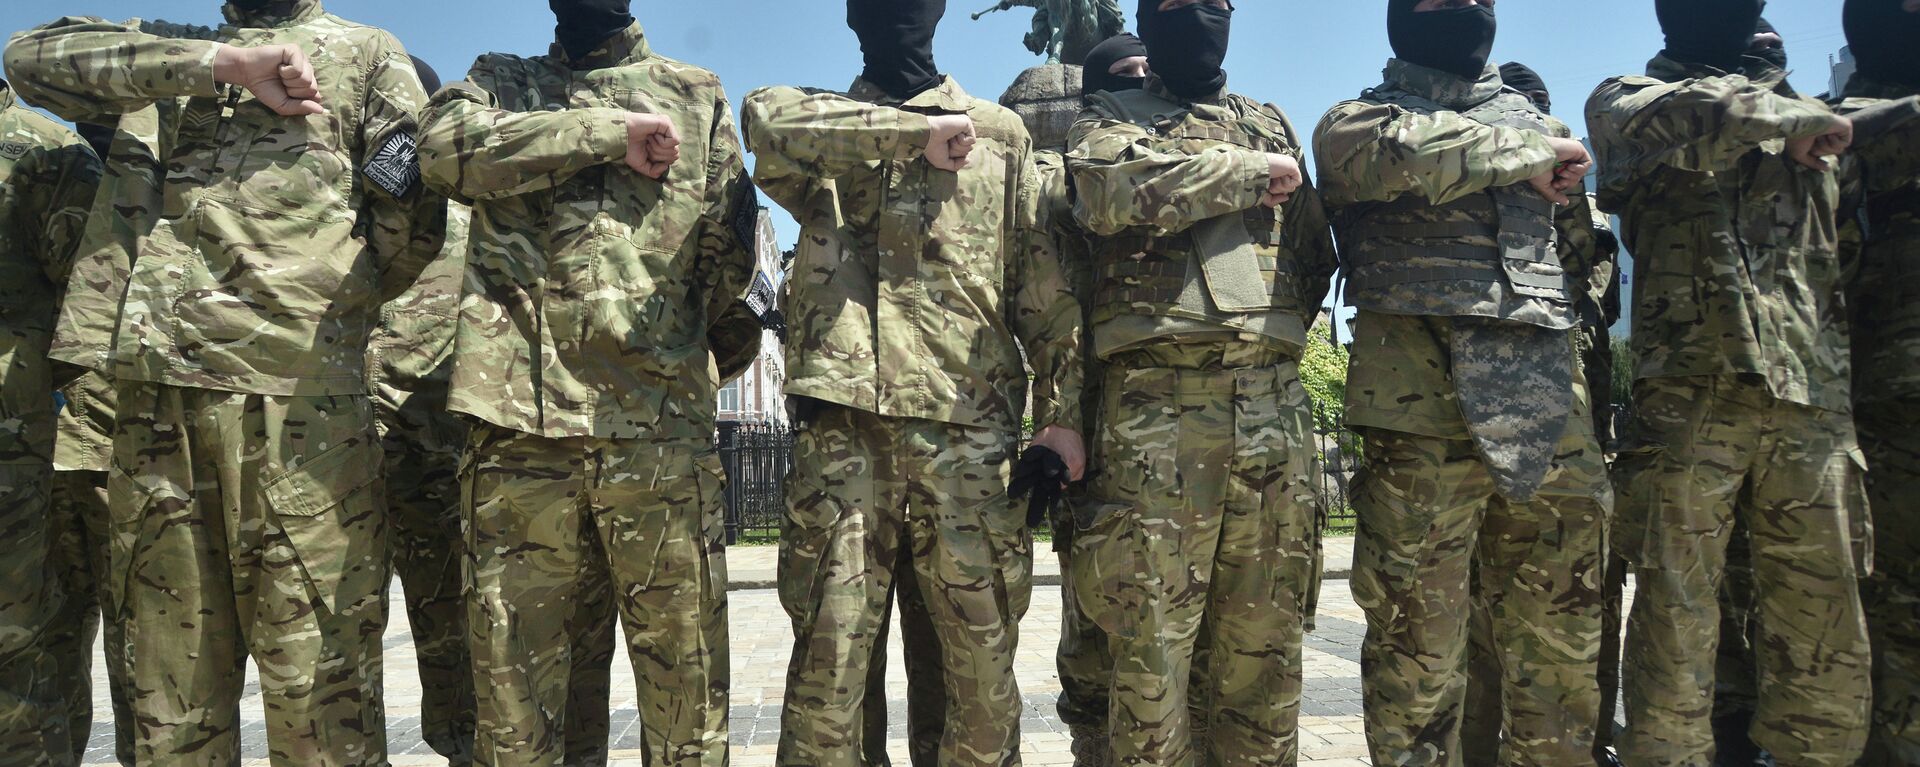 Azov battalion soldiers take oath in Kiev before being sent to Donbass - Sputnik International, 1920, 11.04.2021